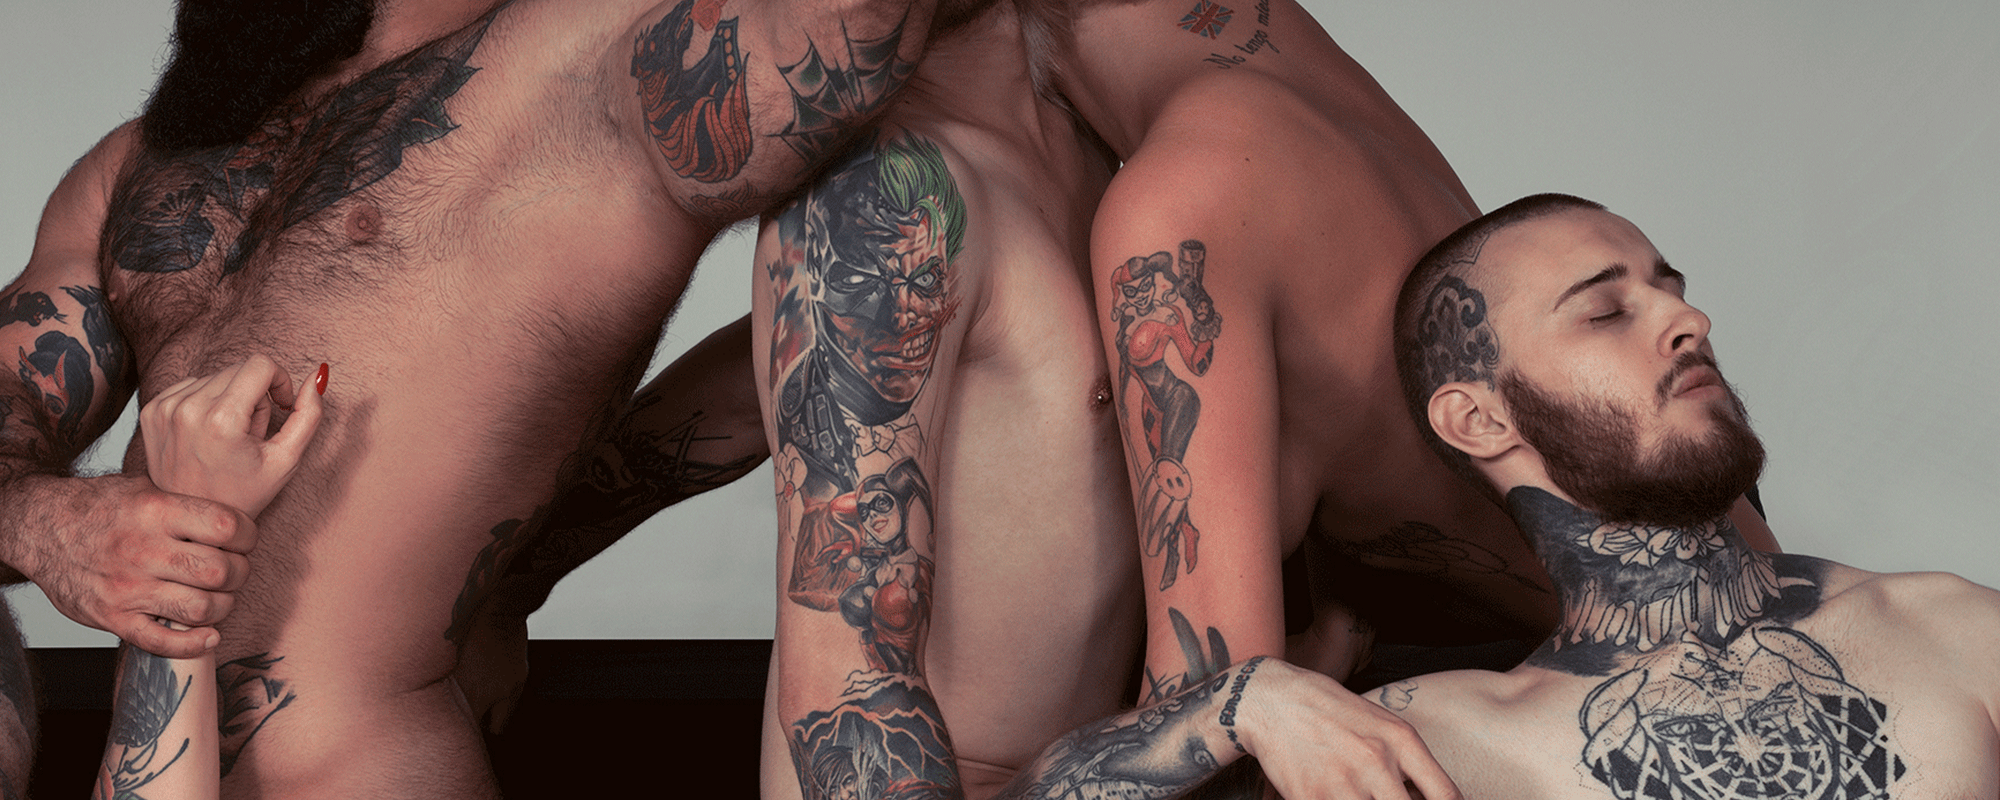 Black Twin: съемка людей в татуировках